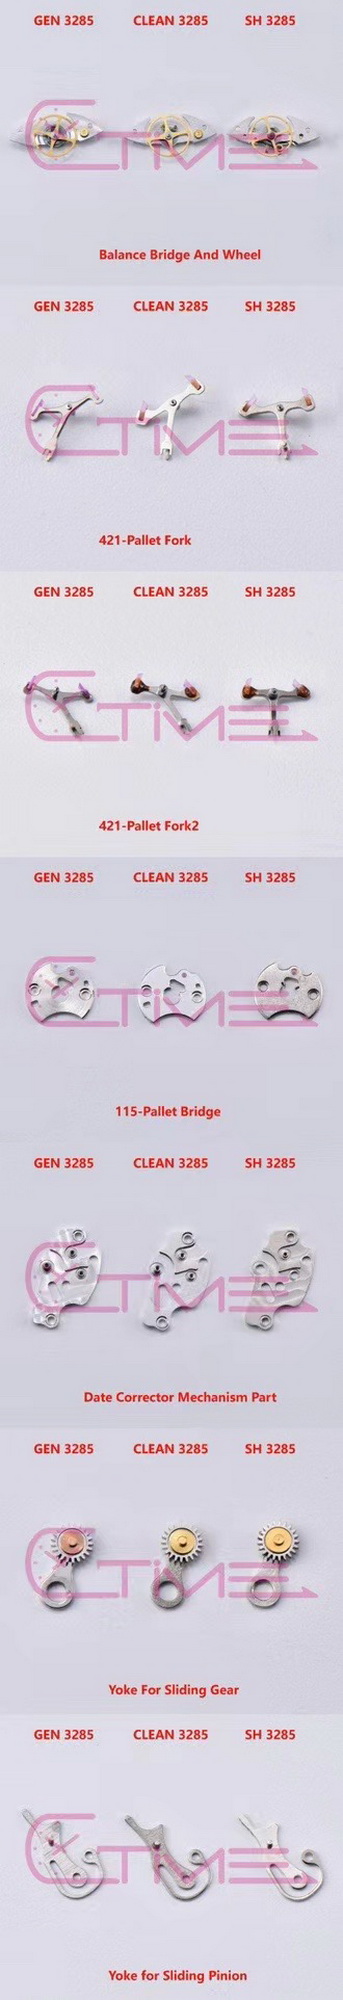 C厂/CLEAN厂新3285机芯和正品3285机芯区别 第3张